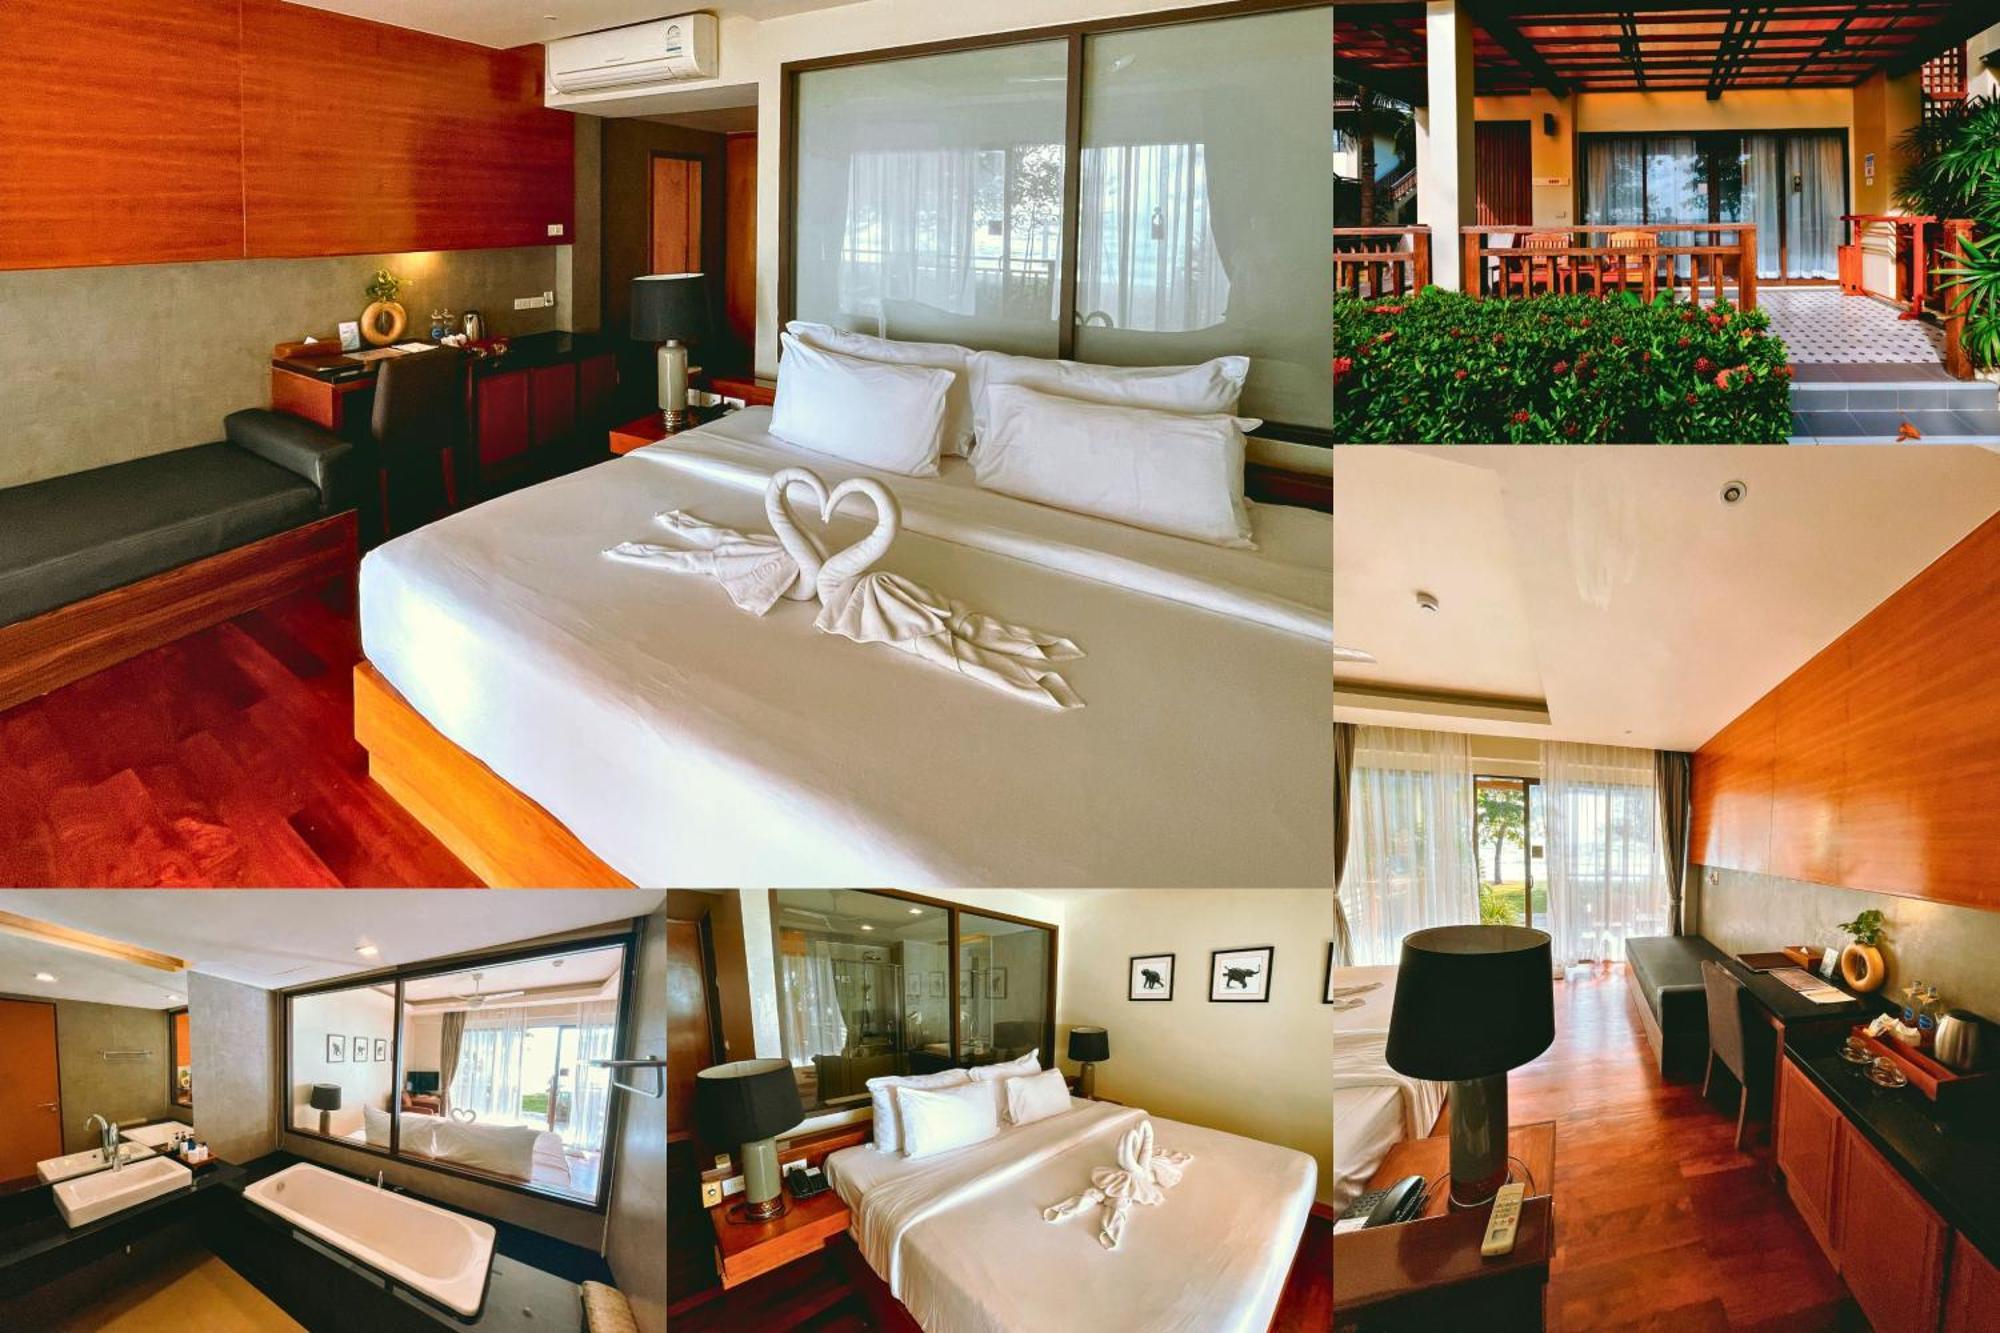 Kacha Resort&Spa, Koh Chang - SHA Extra Plus Exterior foto